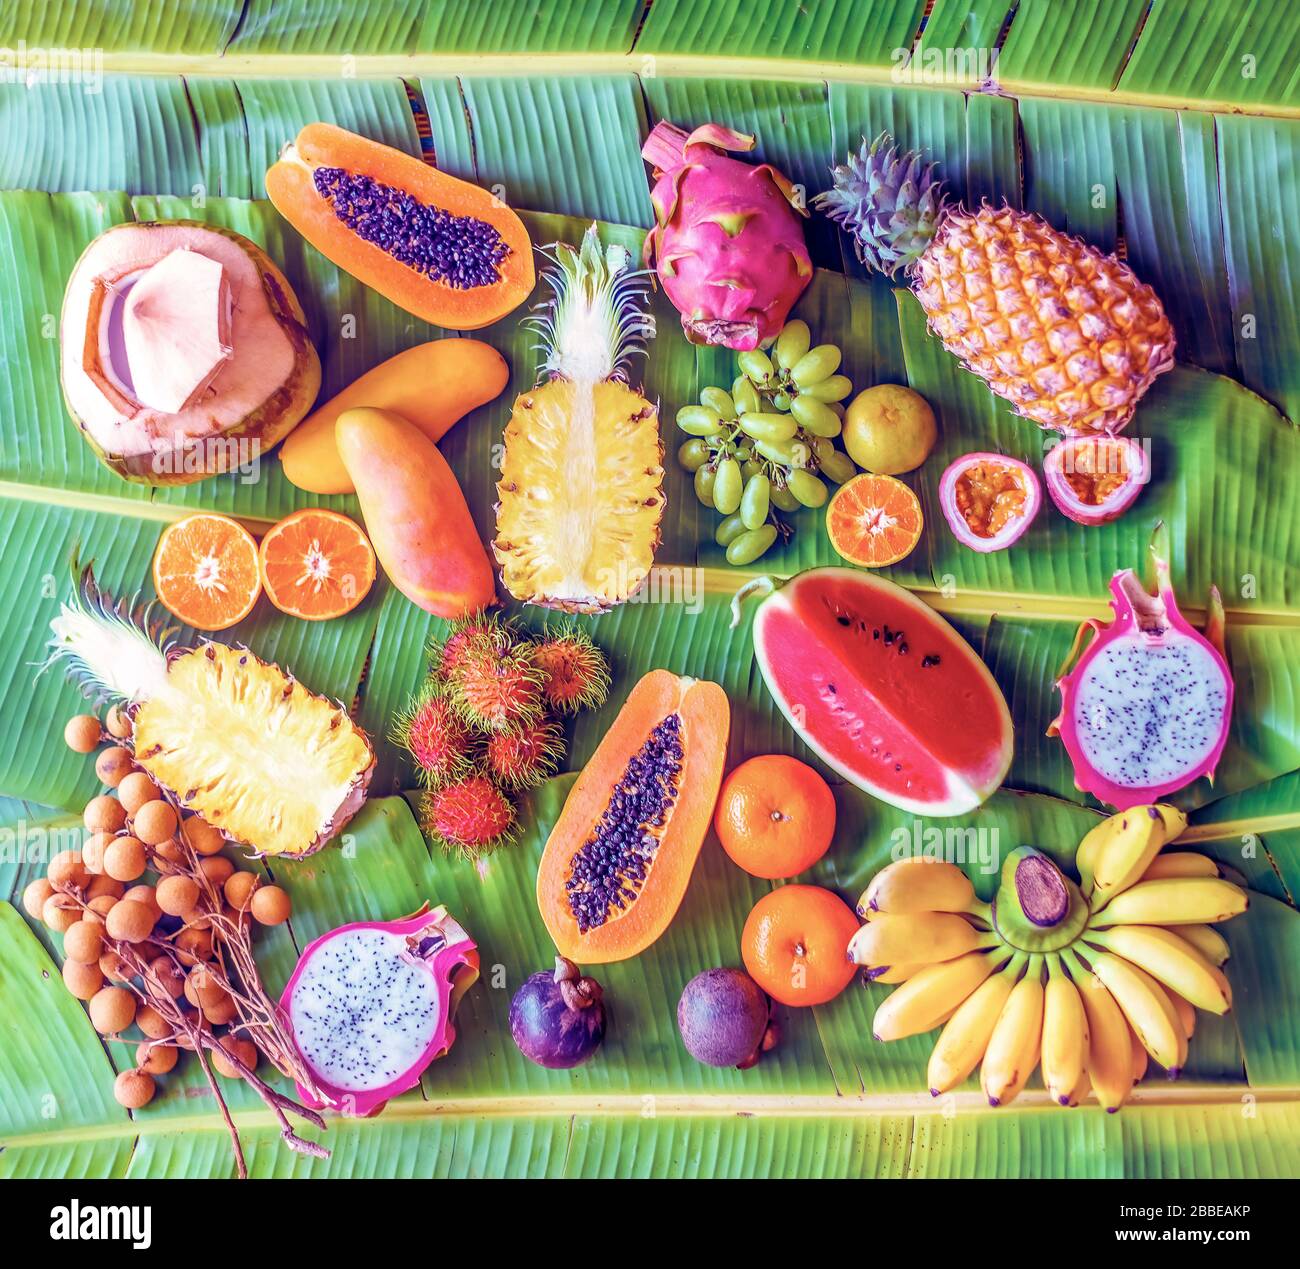 Exotic fruits on banana leaves background - papaya, mango, pineapple, banana, carambola, dragon fruit, lemon, orange, water melon, coconut, rambutan, Stock Photo